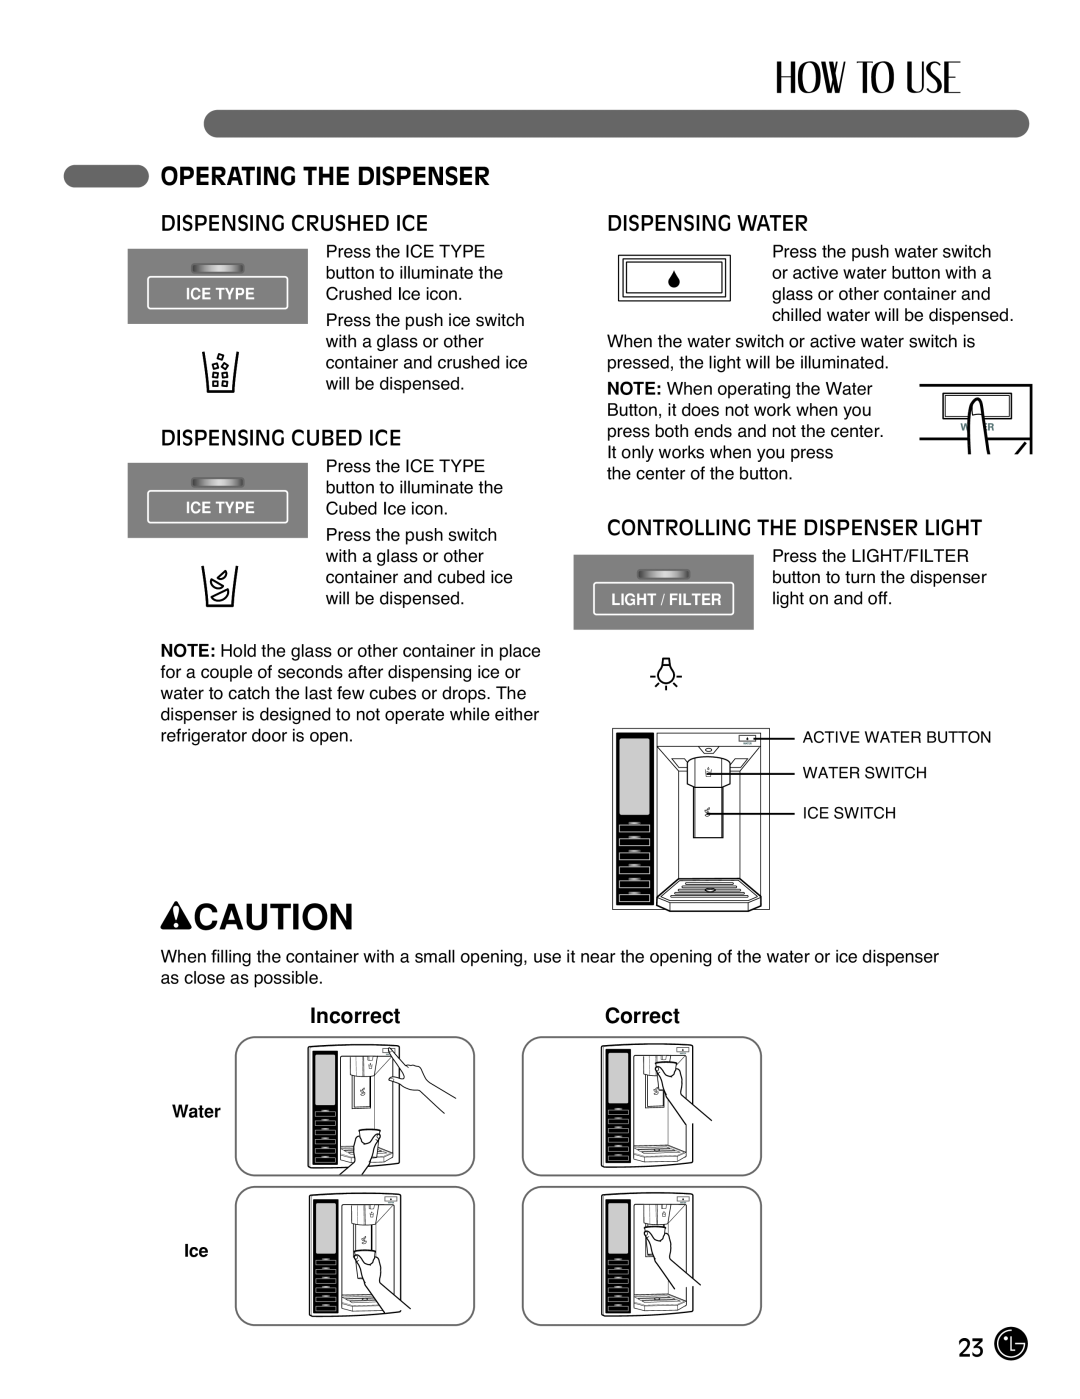 LG Electronics LFX25971** manual Operating The Dispenser, Dispensing Crushed Ice, Dispensing Cubed Ice, Dispensing Water 